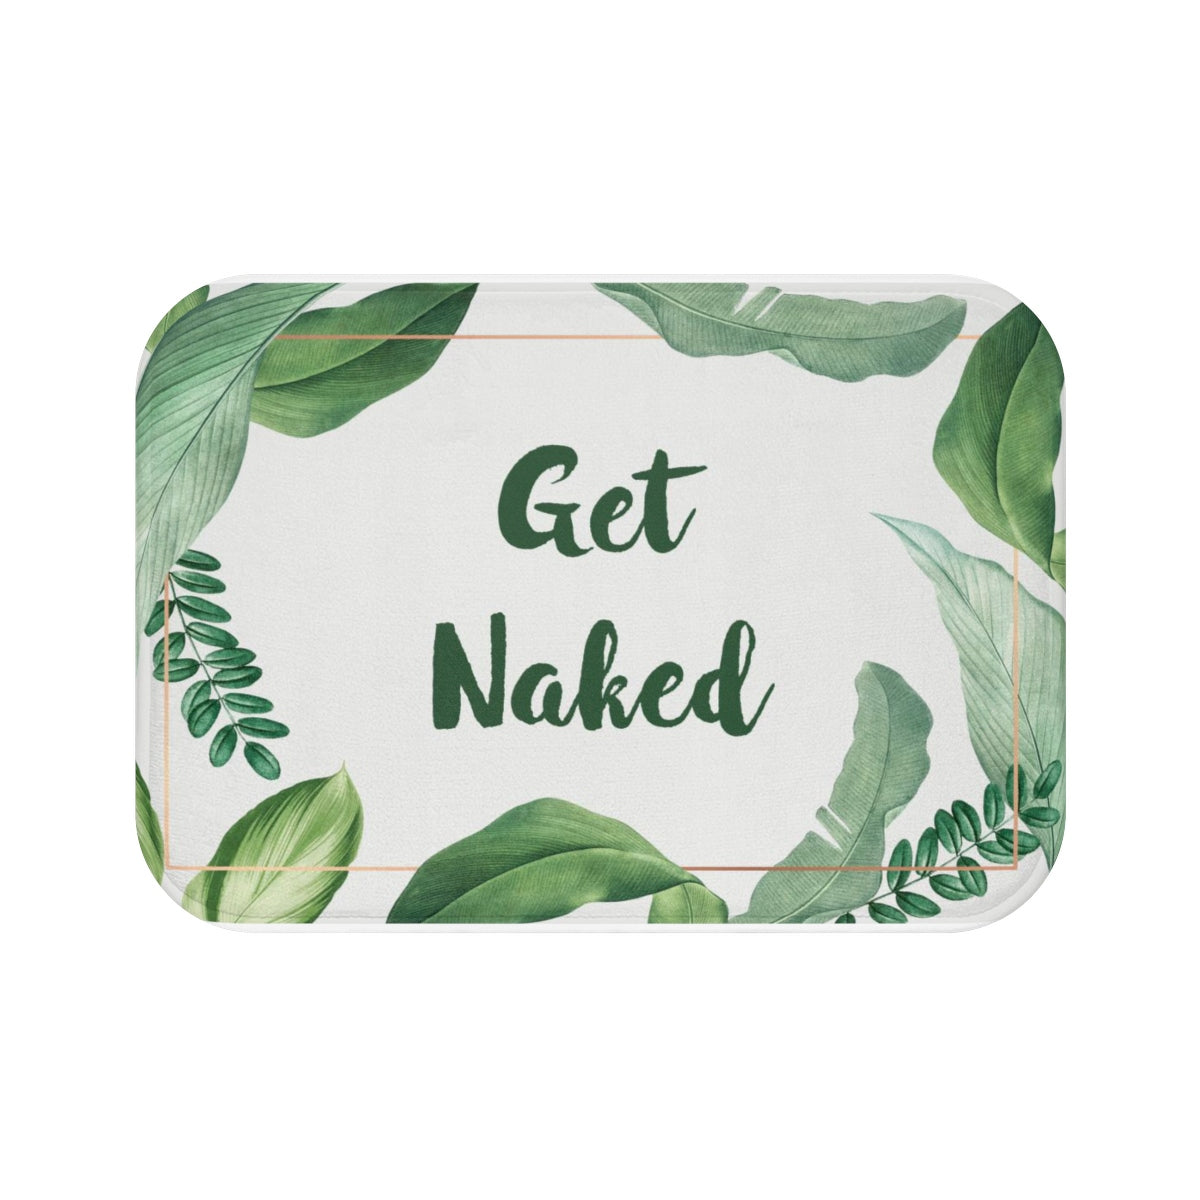 Get Naked Bath Mat, Funny Bathroom Floor Rug Decor, Green Plants Tropical Leaves, Cute Non Slip Memory foam Carpet Starcove Fashion